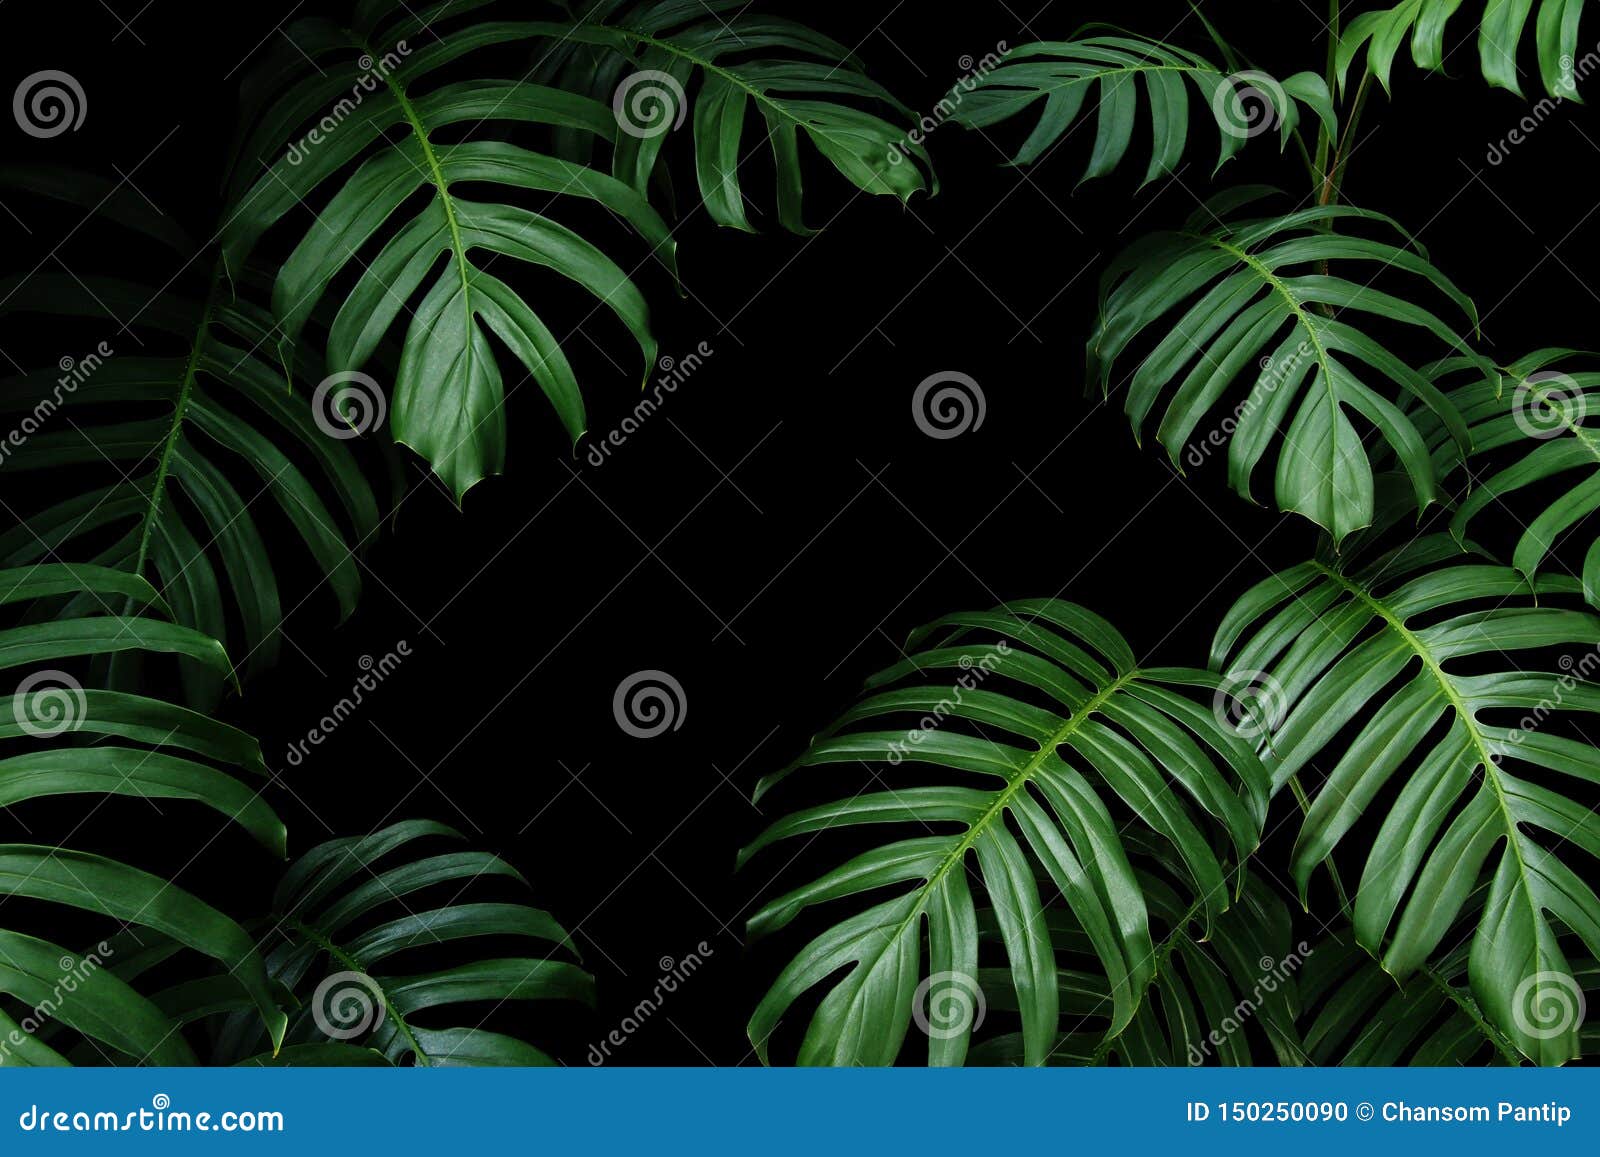 dark green leaves of native monstera the tropical forest plant evergreen vines, nature leaf frame on black background